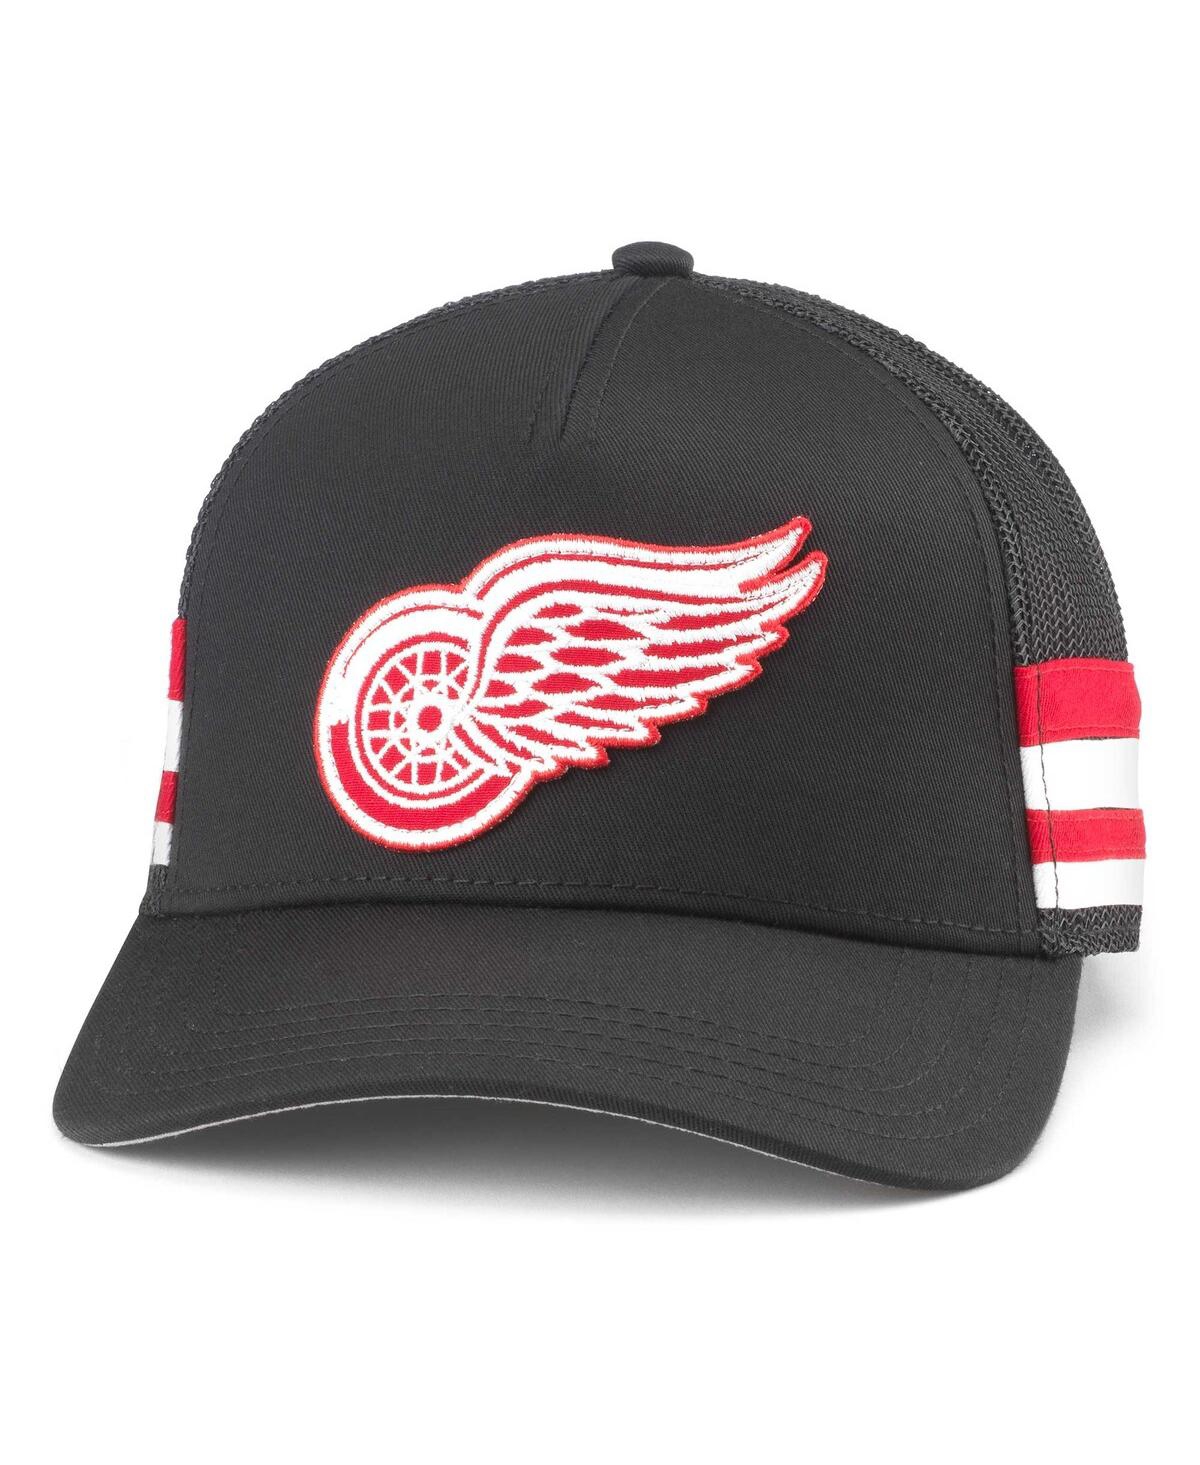 Shop American Needle Men's  Black Detroit Red Wings Hotfoot Stripes Trucker Adjustable Hat